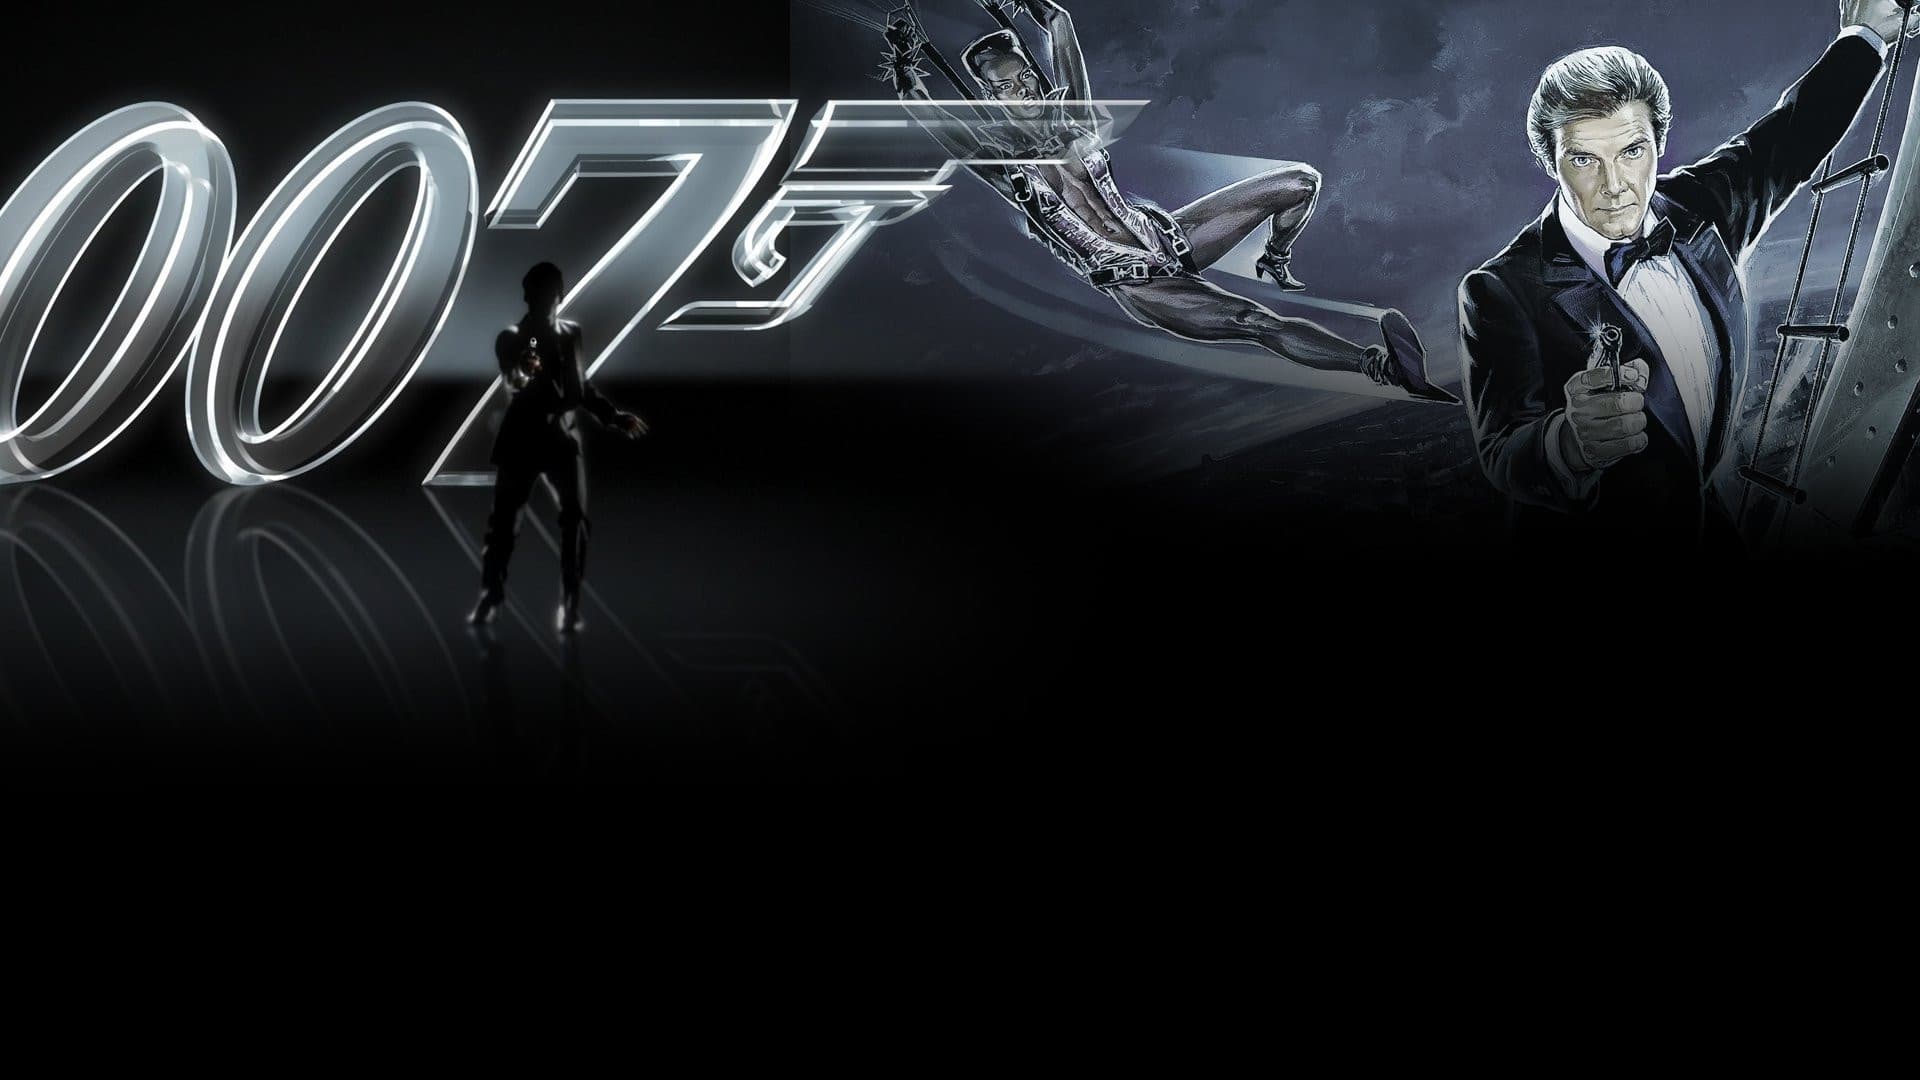 James Bond: Agent 007 i skudlinjen